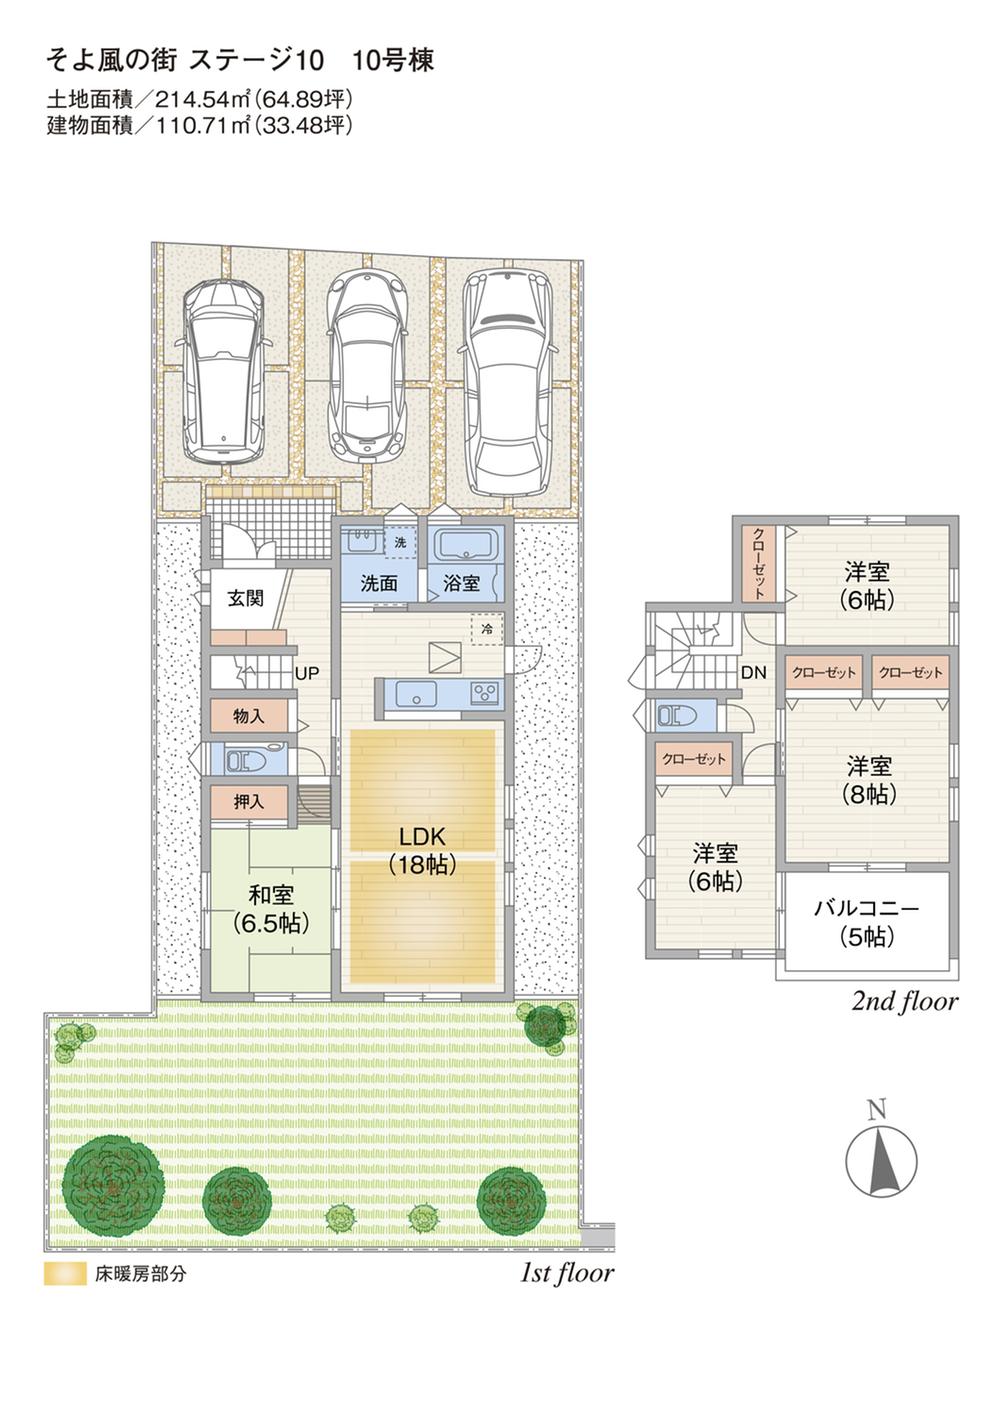 Floor plan. (10 Building), Price 24.5 million yen, 4LDK, Land area 214.54 sq m , Building area 110.71 sq m